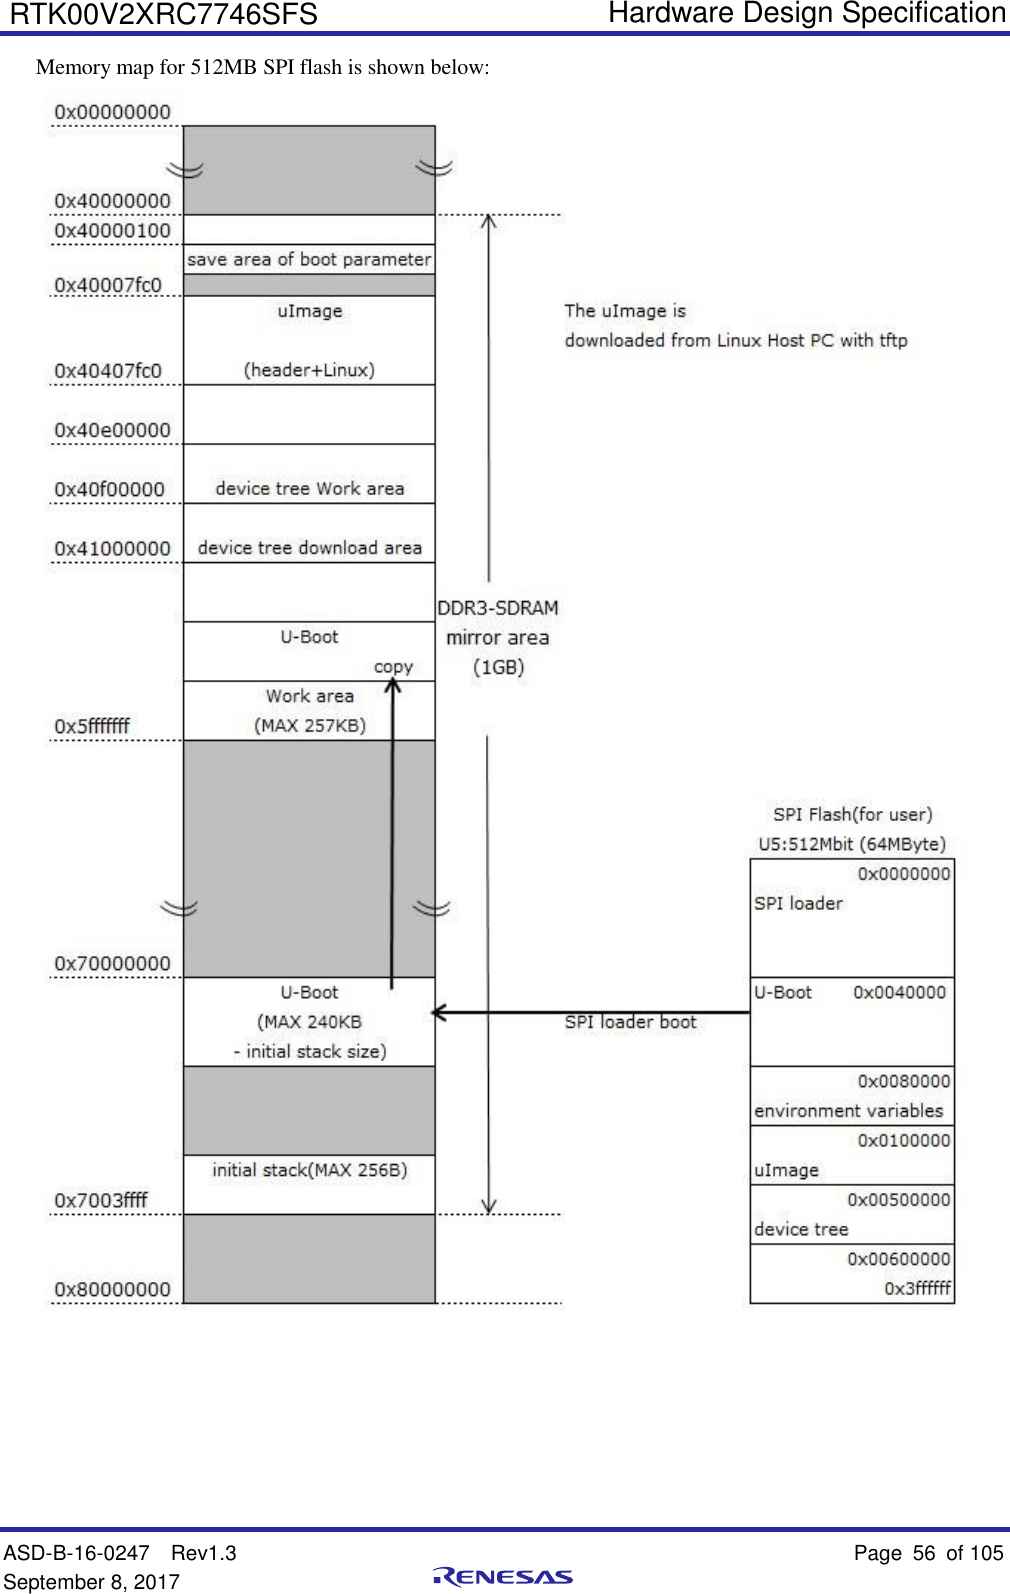   Hardware Design Specification ASD-B-16-0247  Rev1.3    Page 56  of 105 September 8, 2017      RTK00V2XRC7746SFS Memory map for 512MB SPI flash is shown below:     